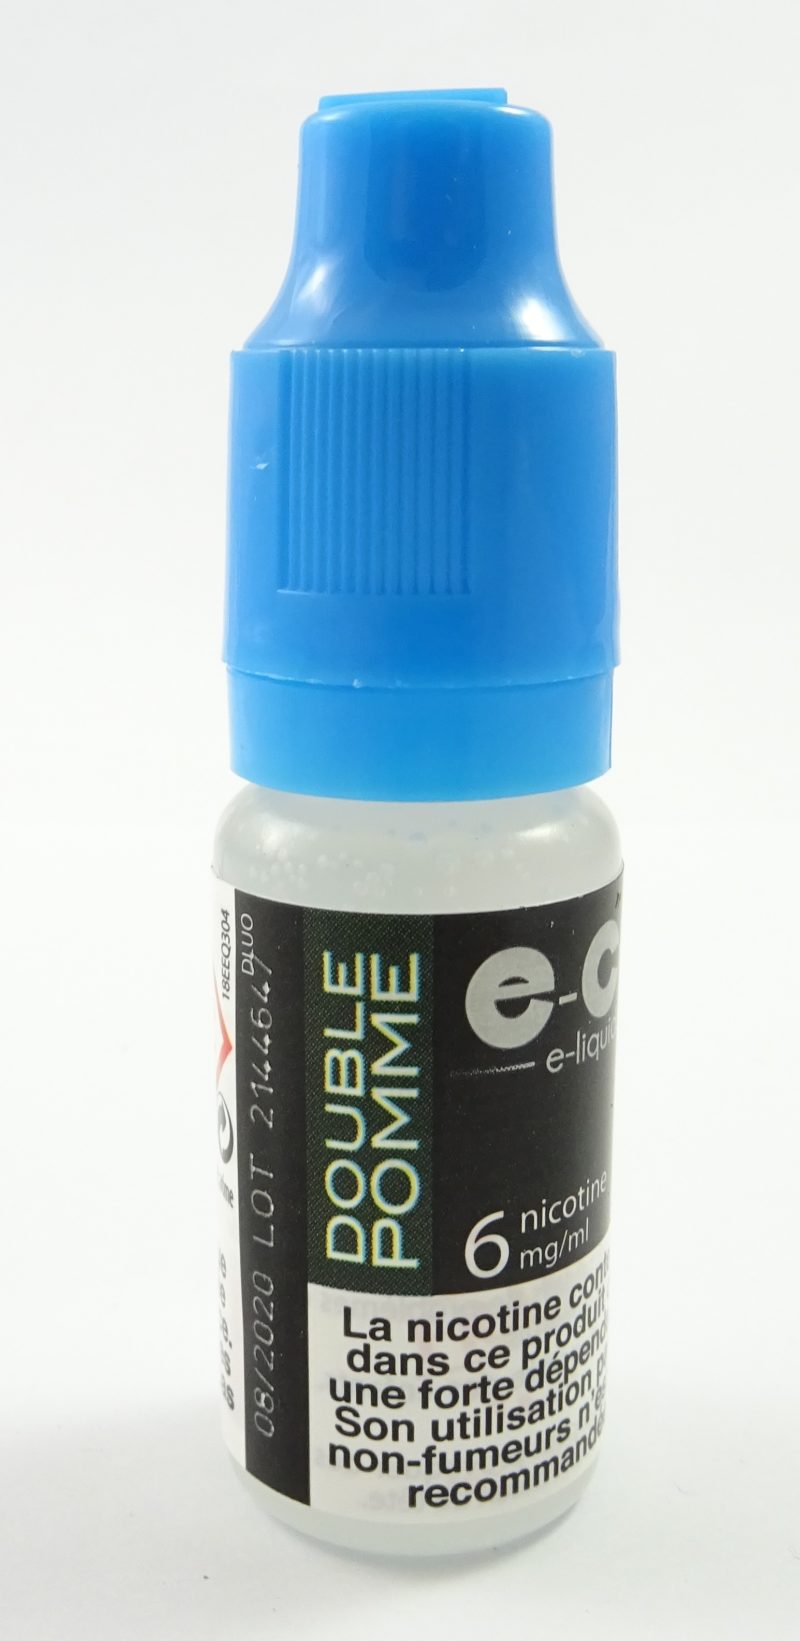 E-CG double pomme 6mg de nicotine.